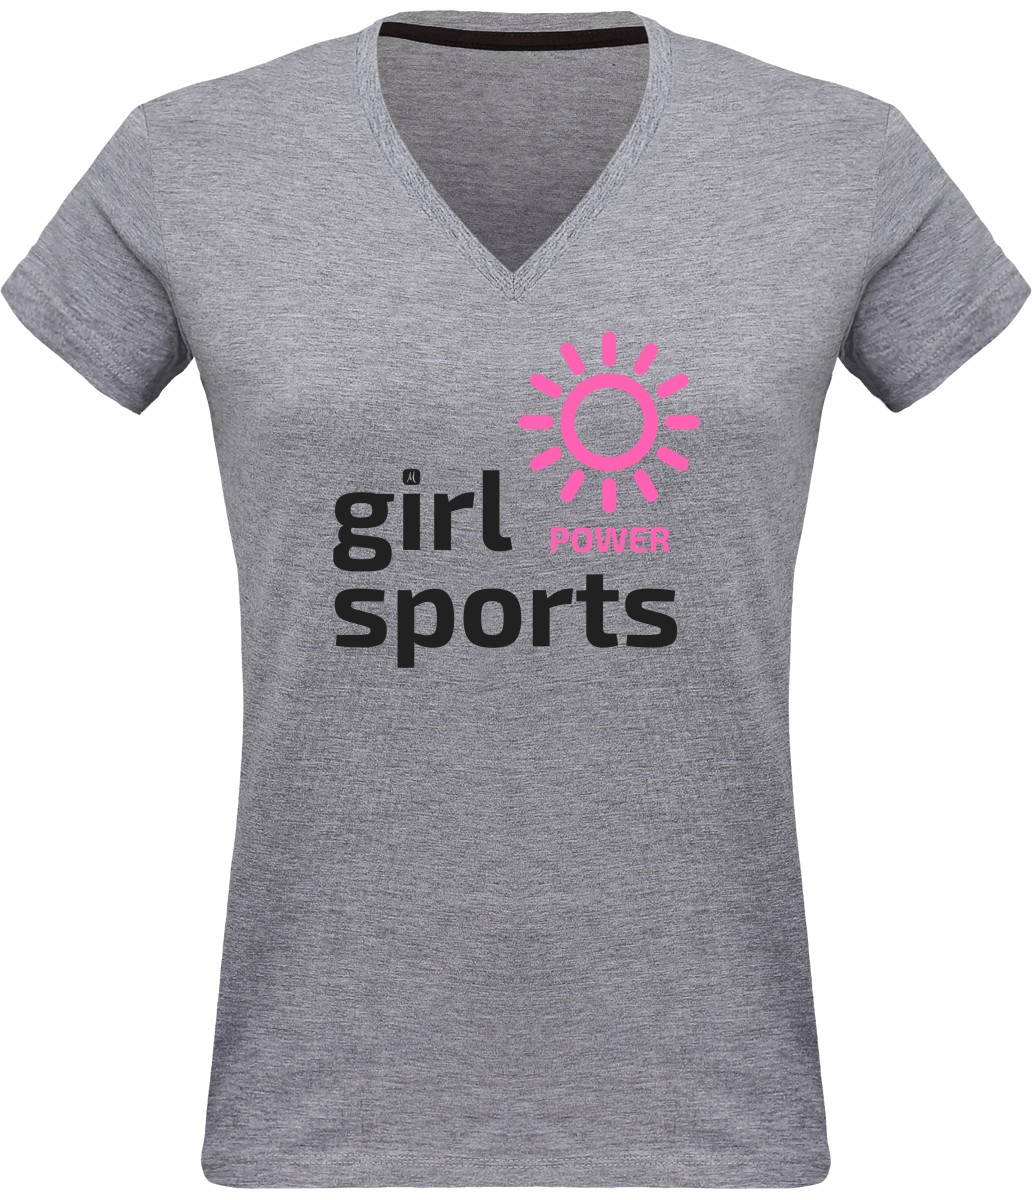 T-SHIRT COL V BASKET FEMME → Girl Power Sports